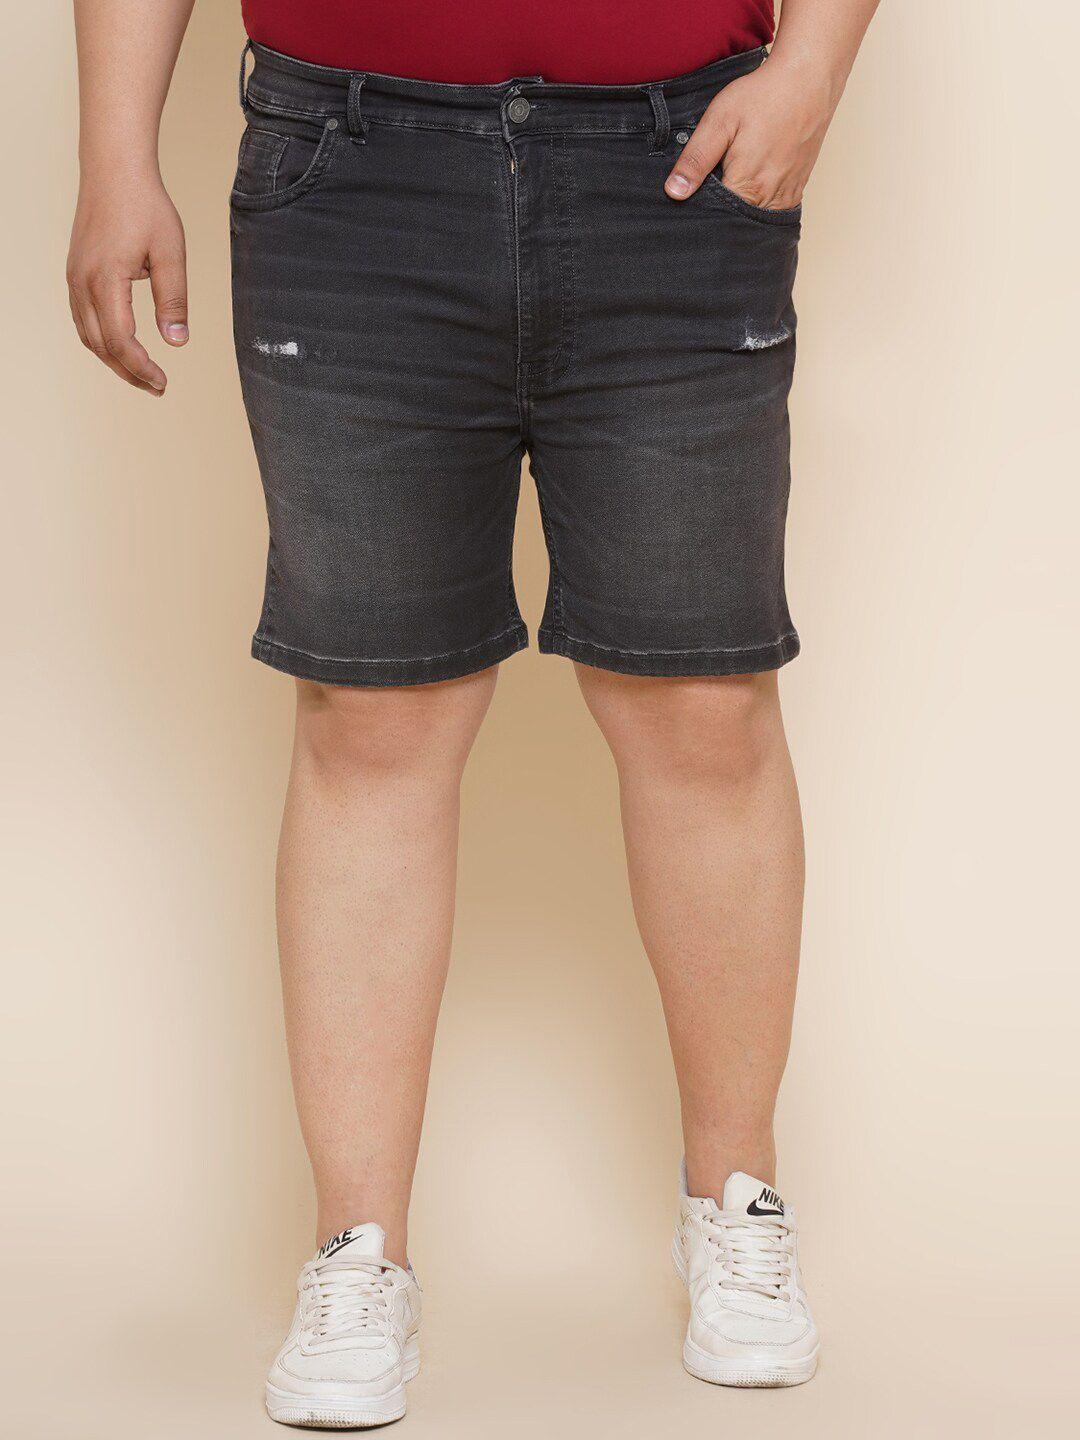 john-pride-men-plus-size-mid-rise-washed-denim-shorts